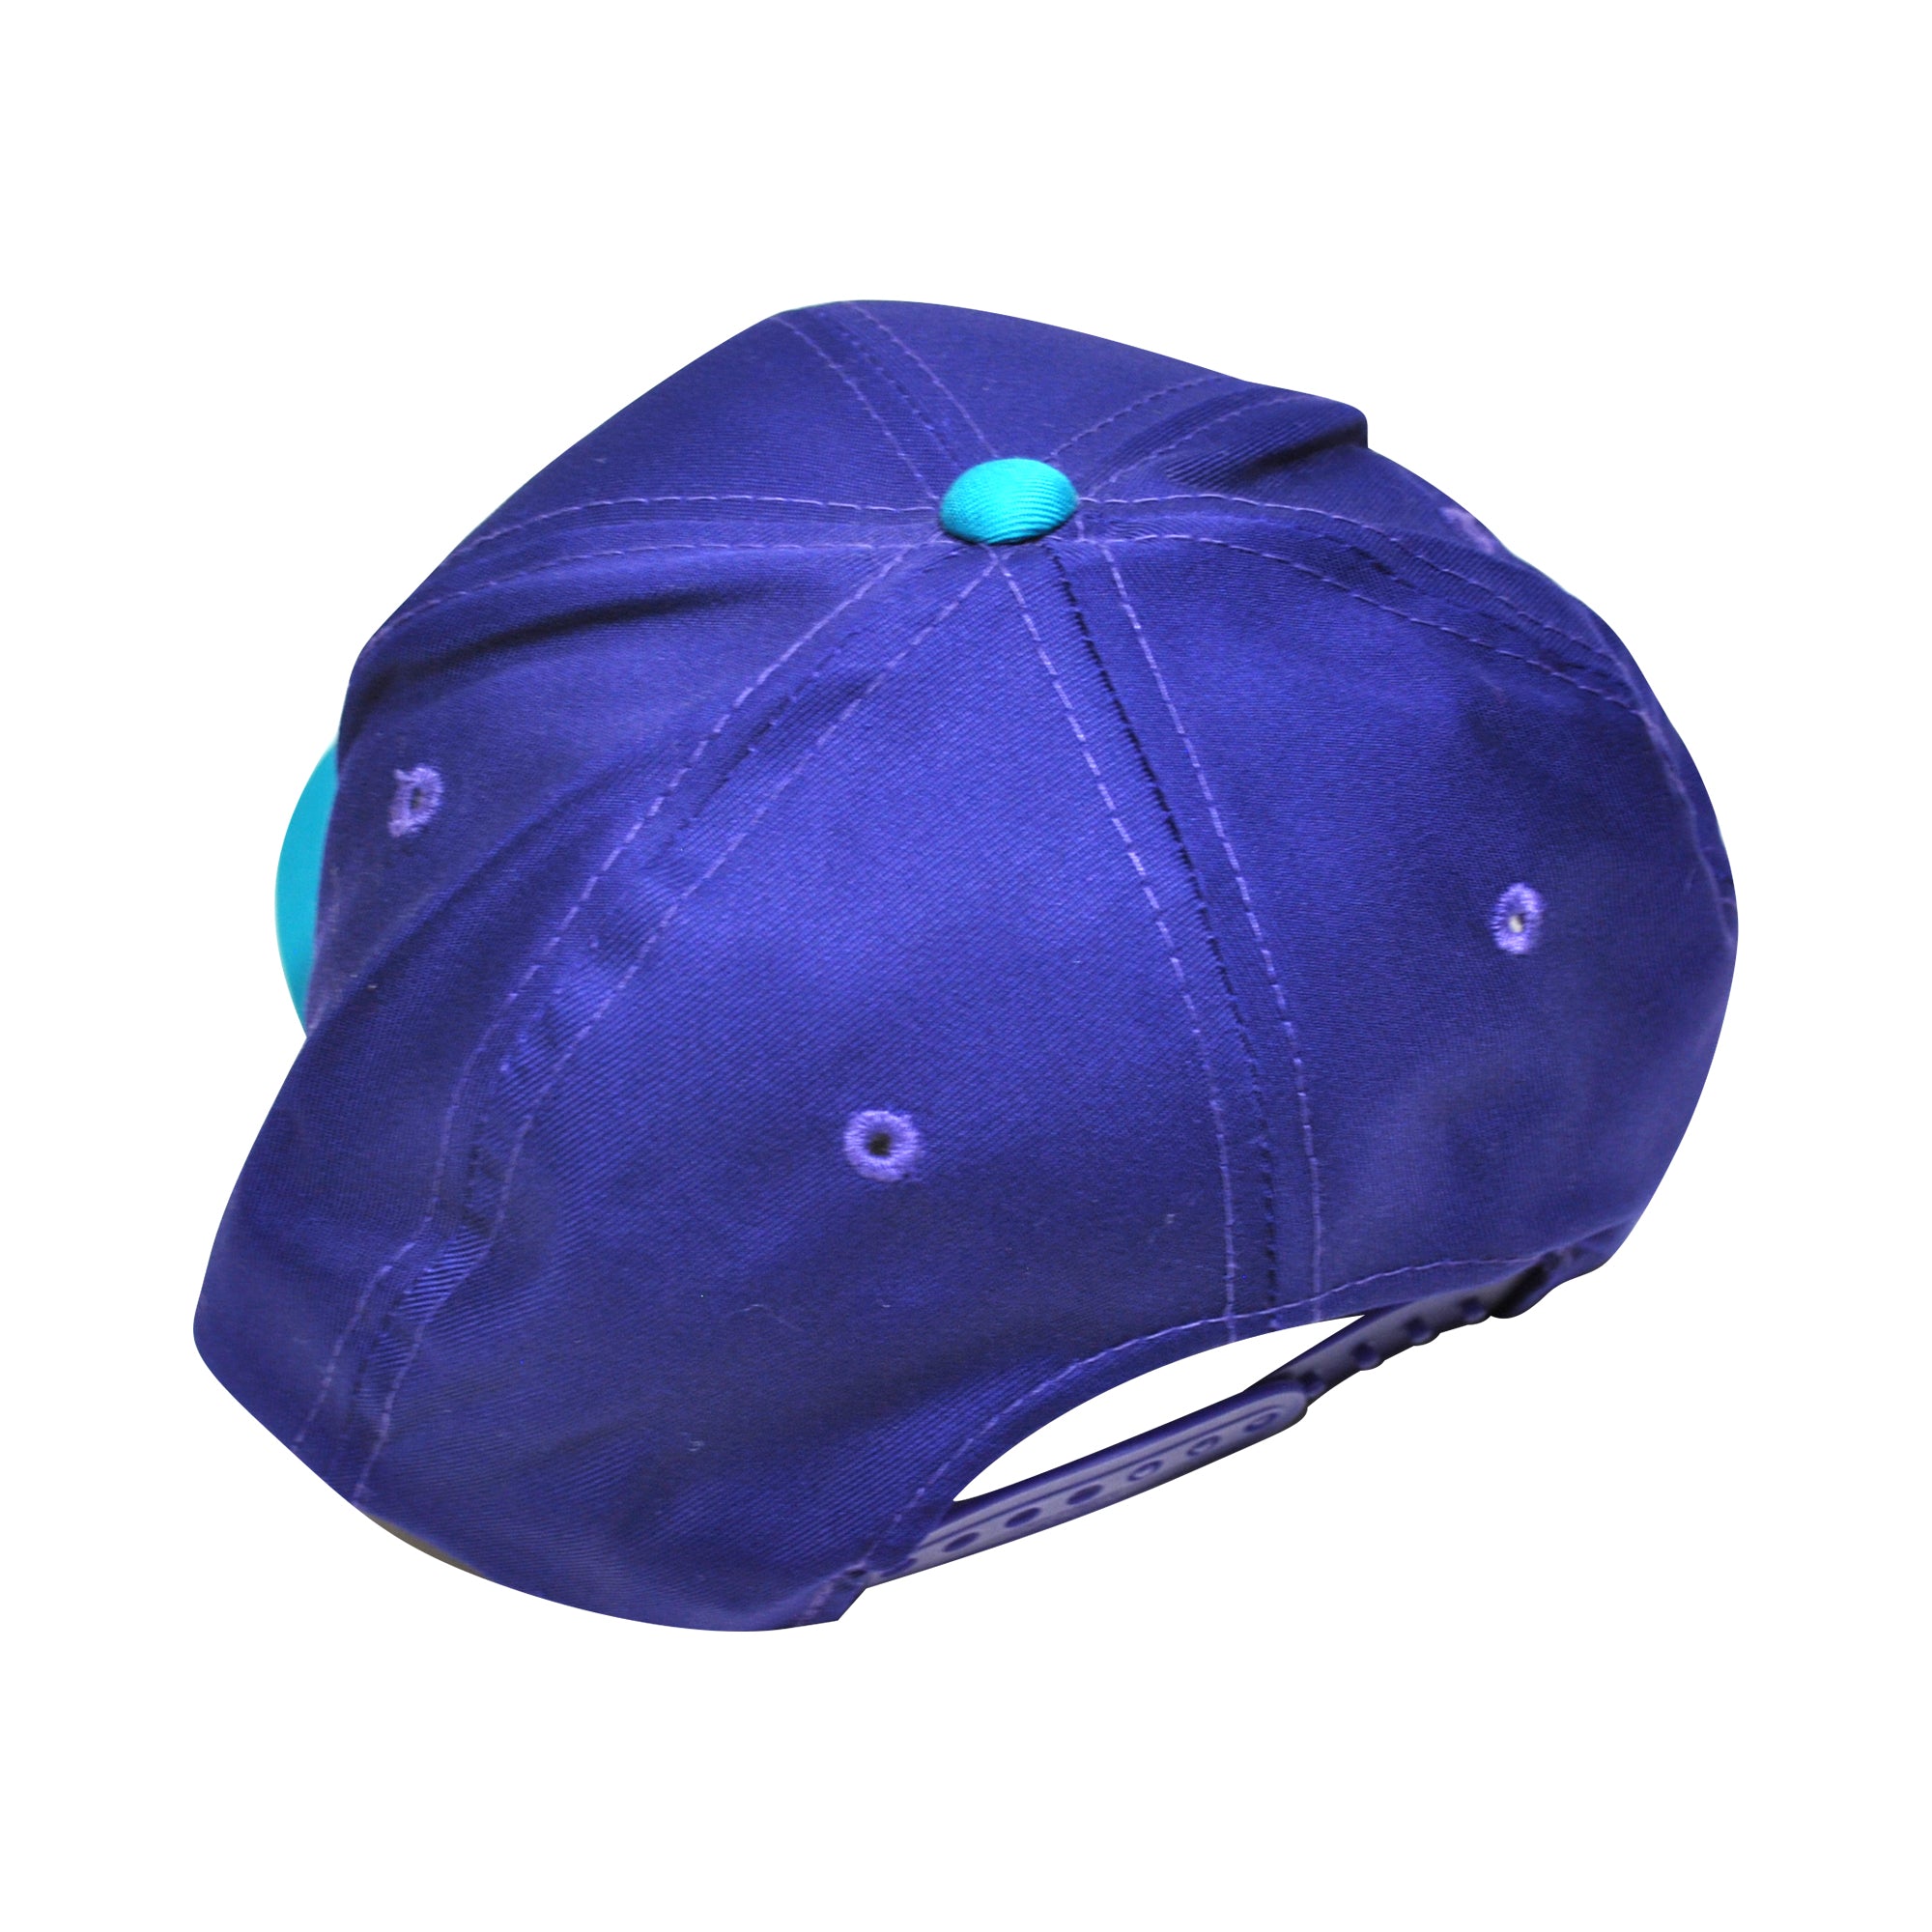 Charlotte Hornets Purple Snapback Hat Sport Specialties READ DESCRIPTION